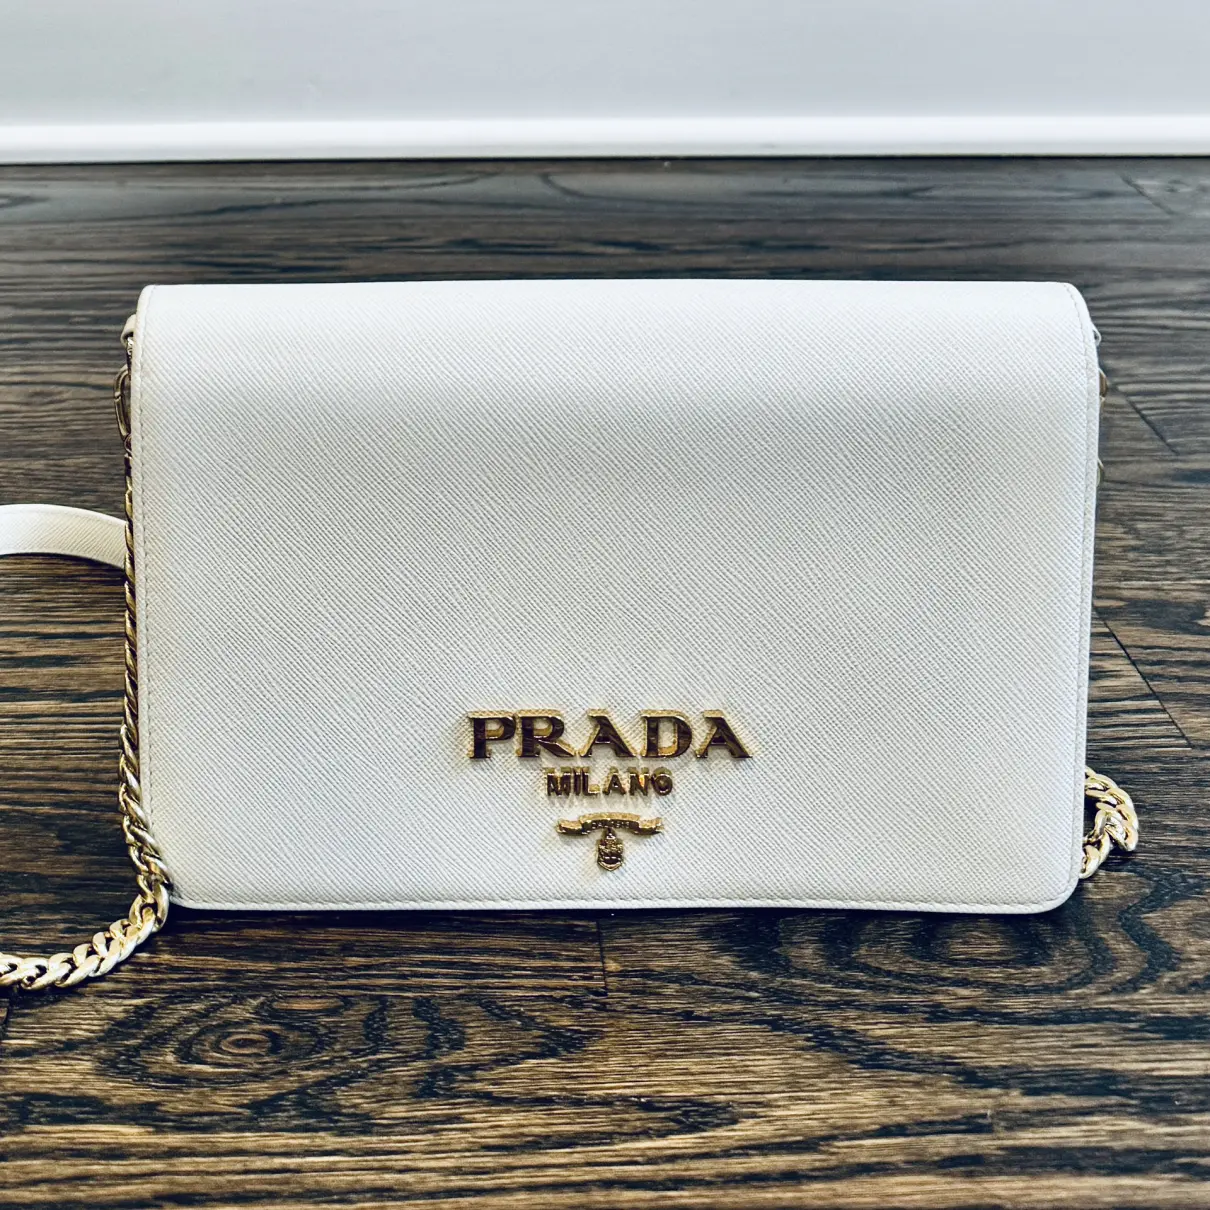 Buy Prada Saffiano leather mini bag online